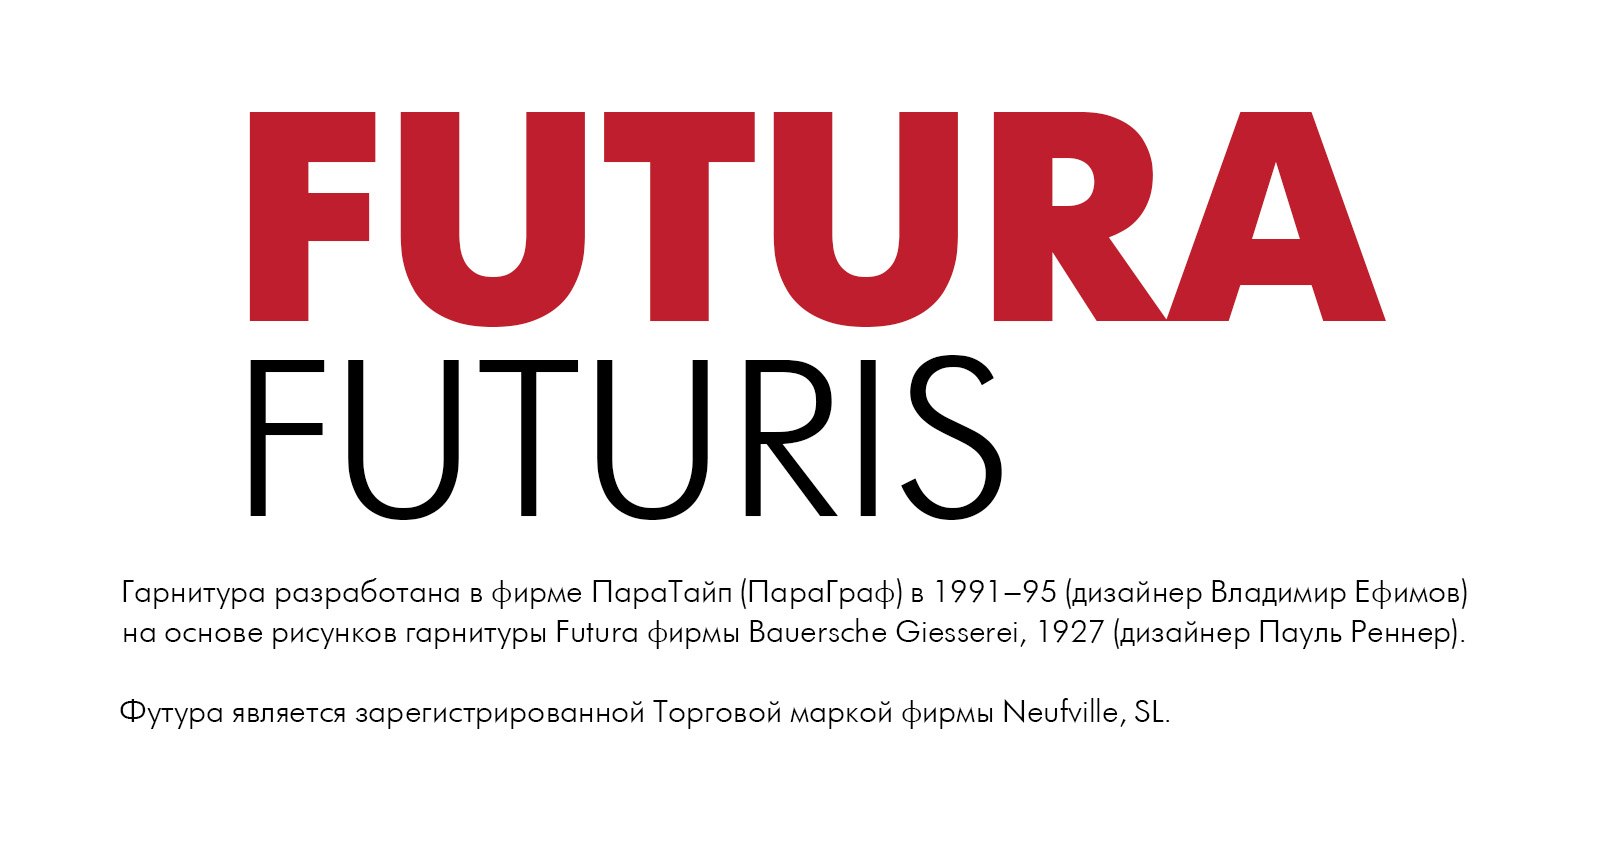 Пример начертания шрифта Futura Futuris